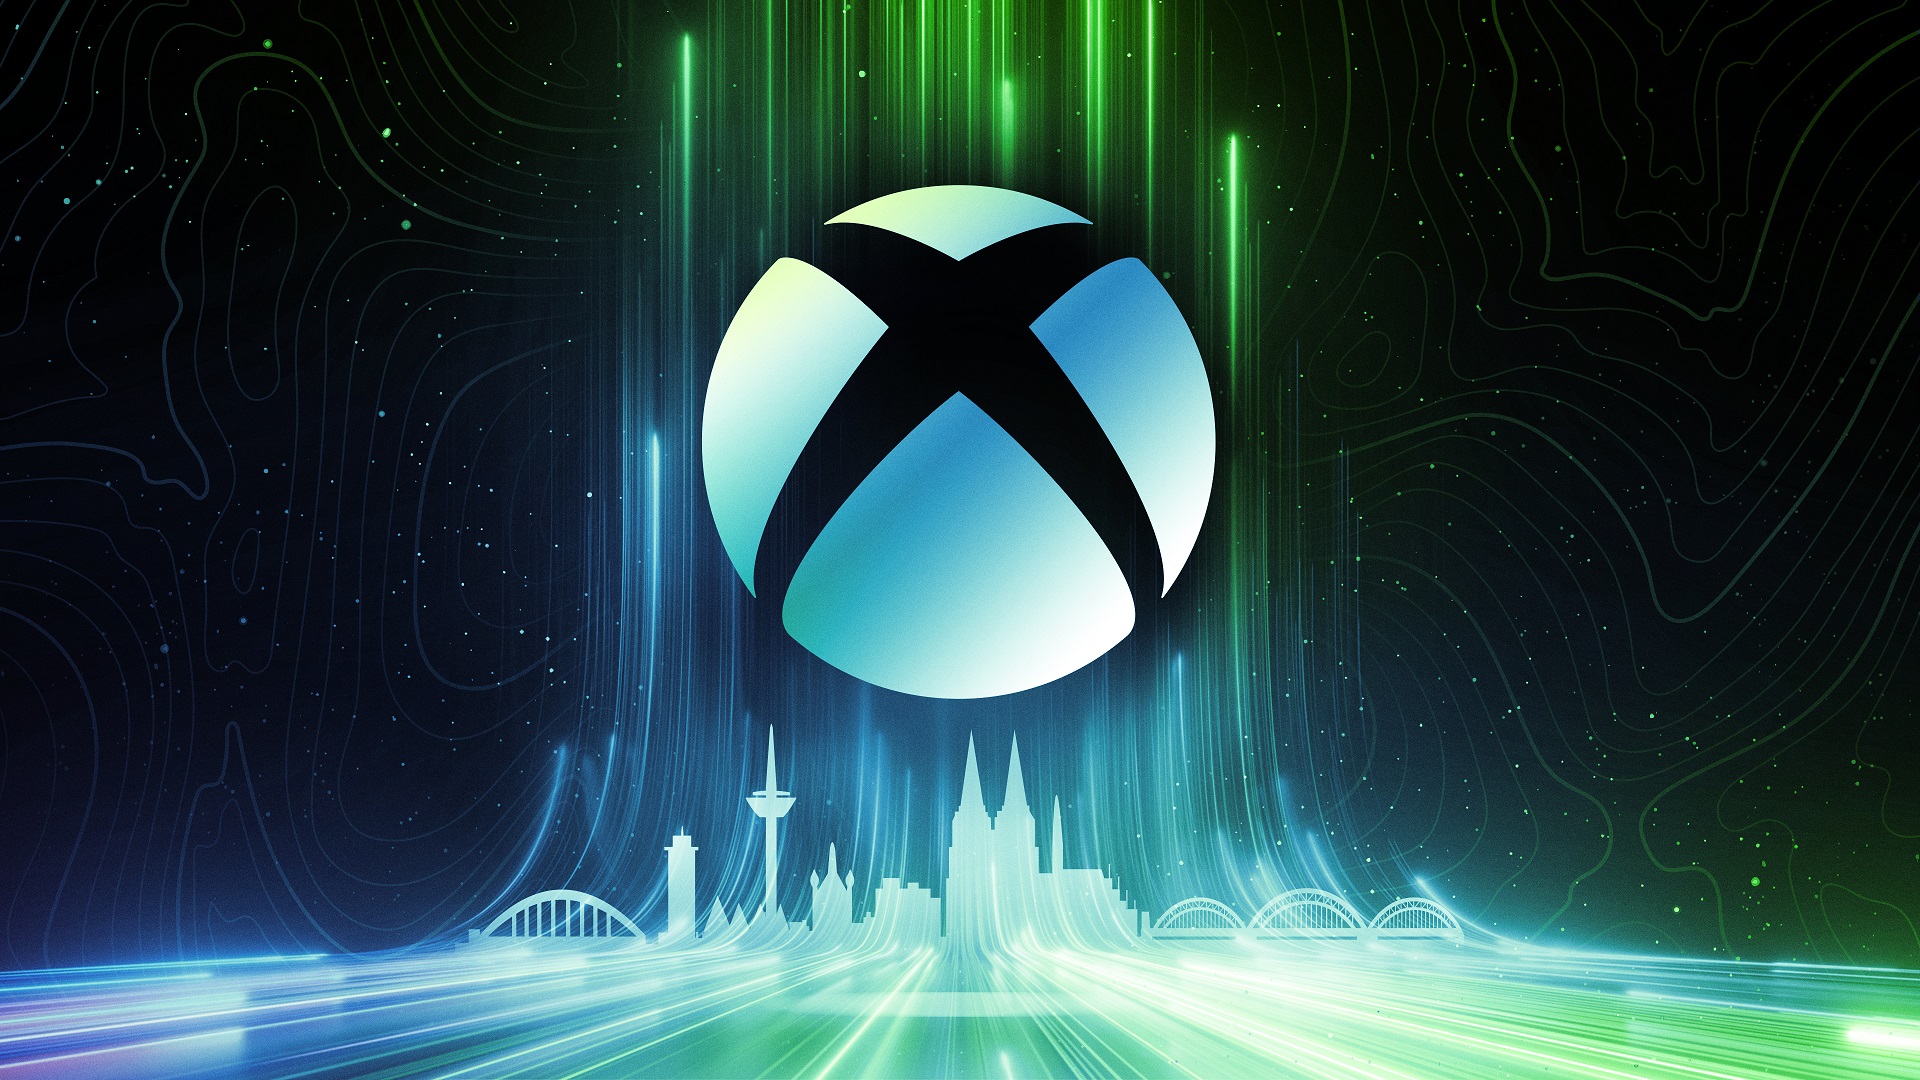 Xbox Game Studios - Gematsu